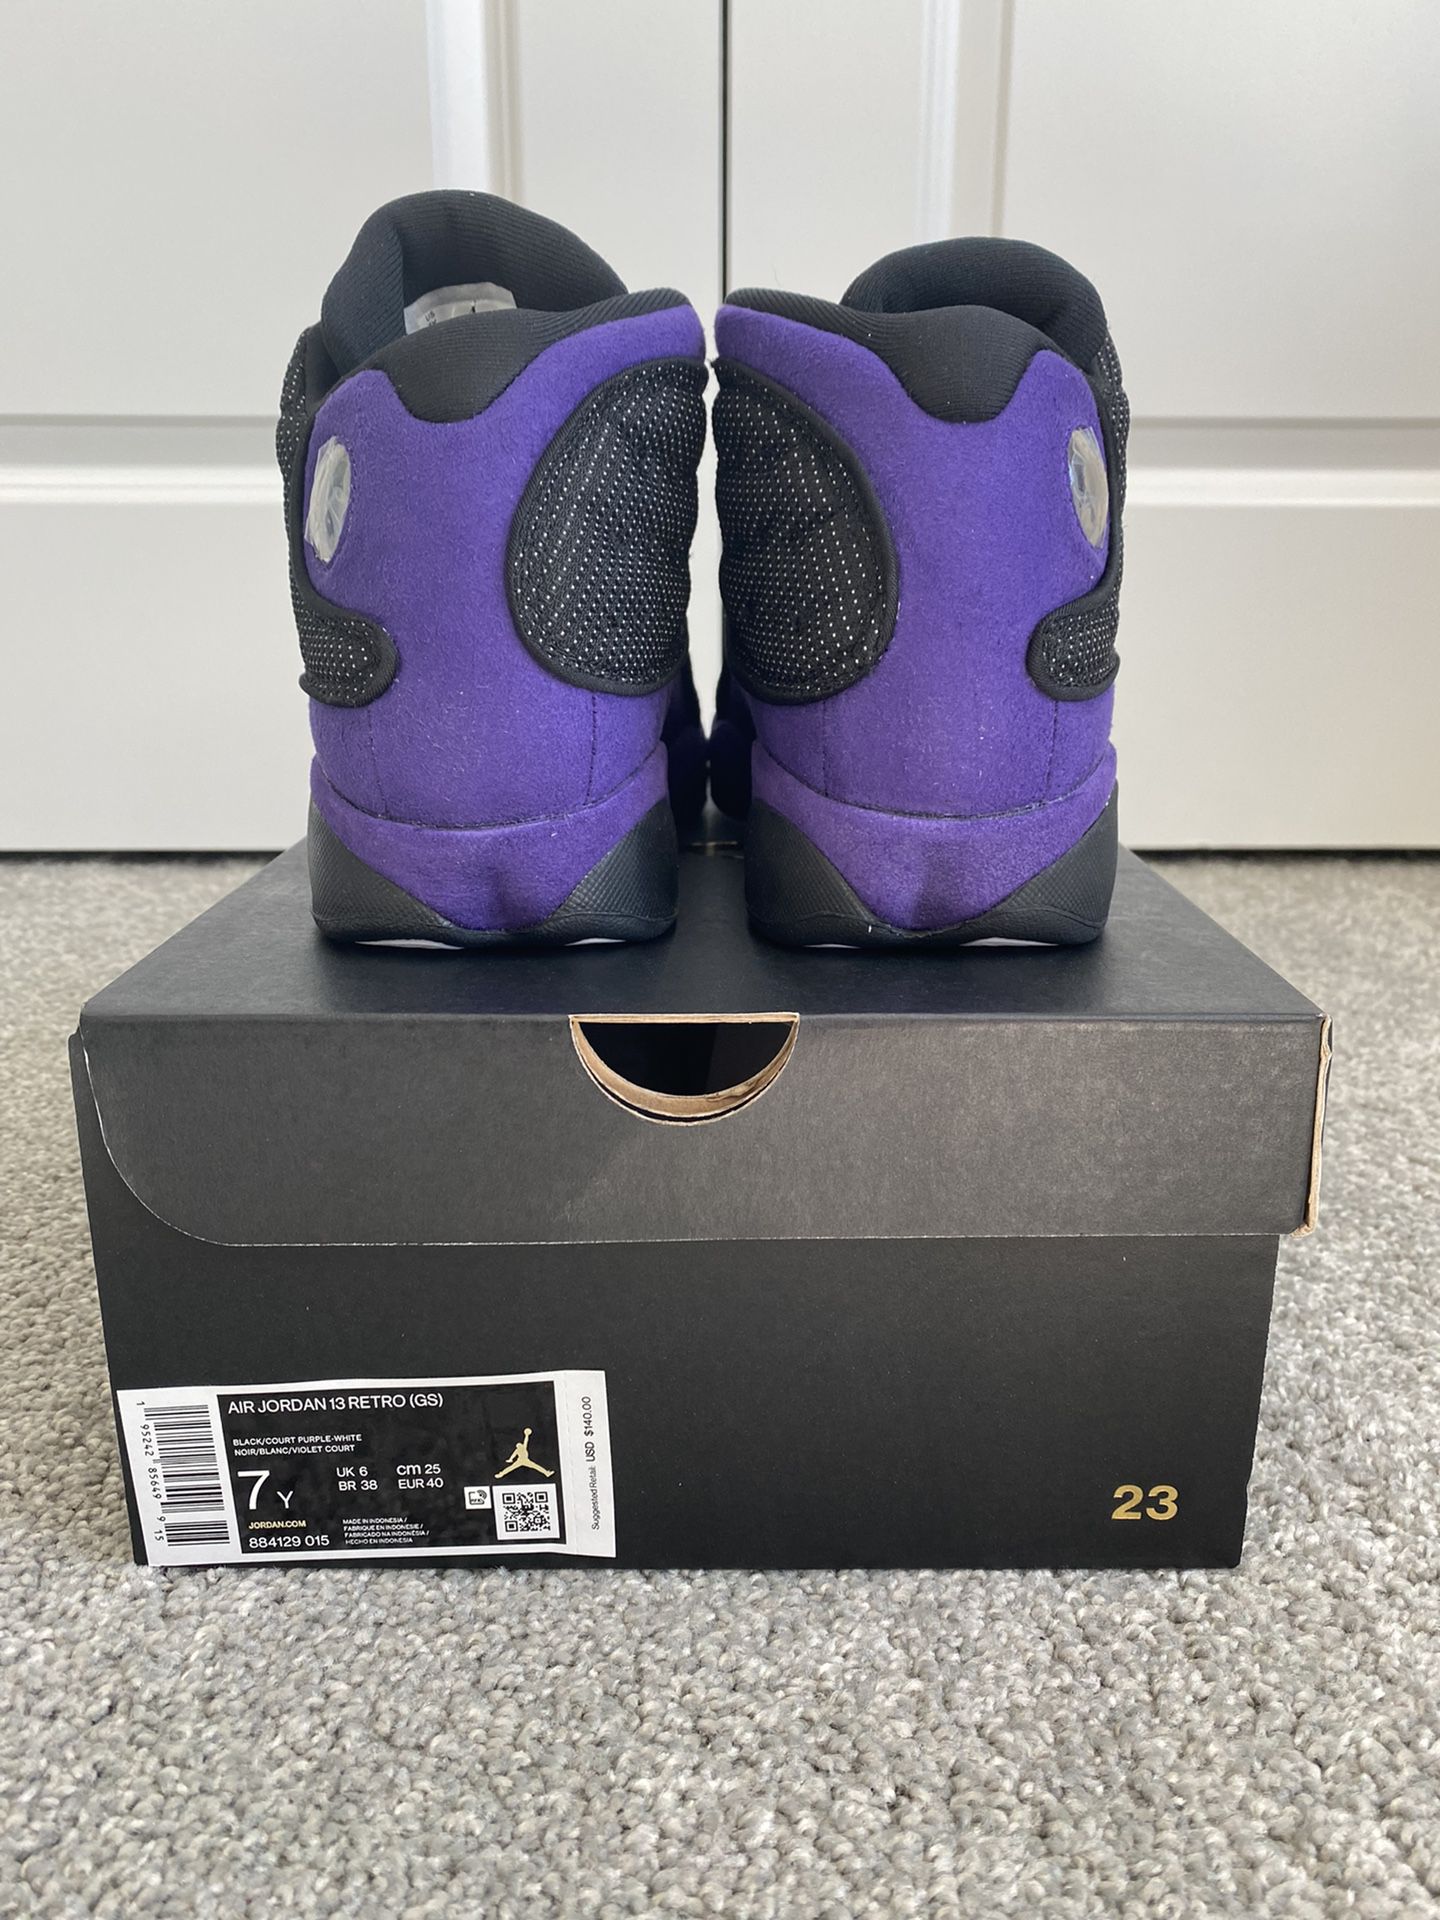 Jordan 13 Retro “Court Purple” (GS7) for Sale in Houston, TX - OfferUp